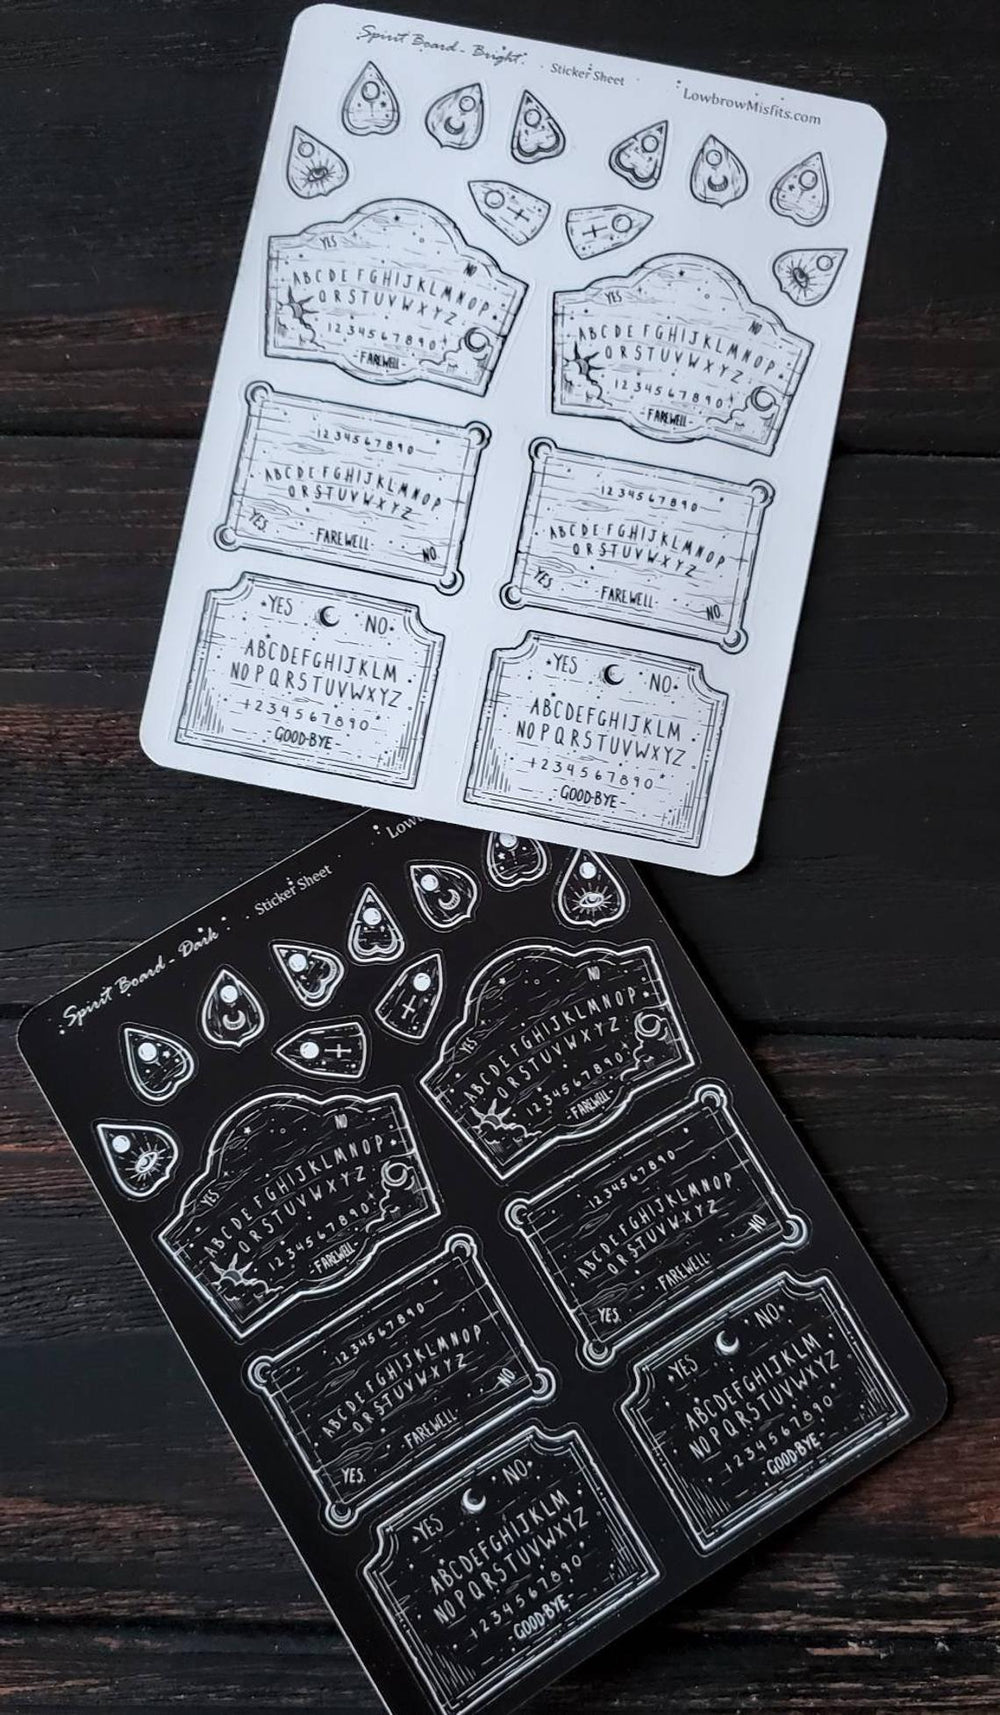 Ouija spirit board STICKER sheet set